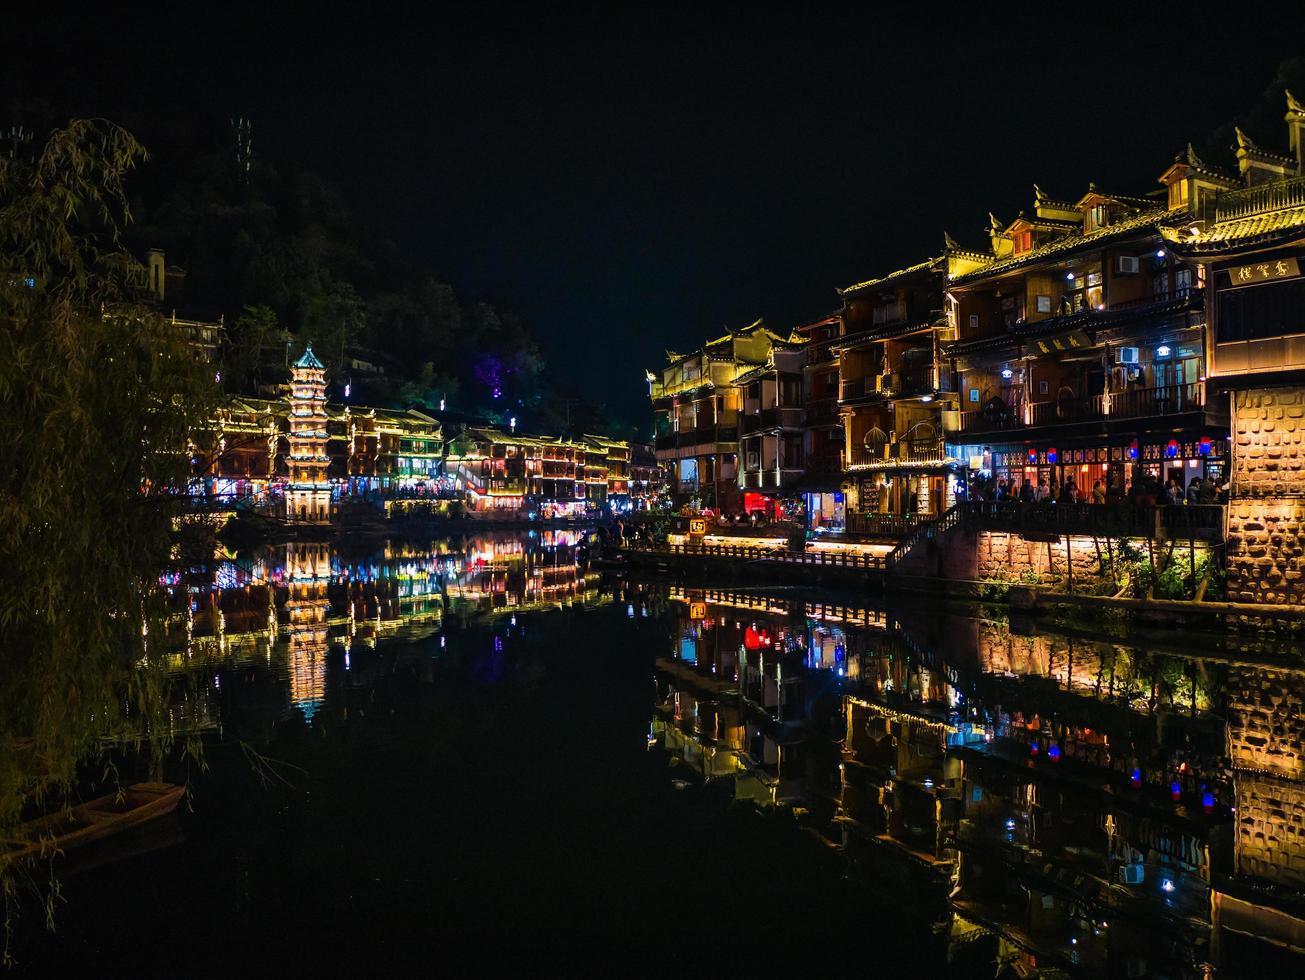 landschaftsansicht in der nacht der alten stadt fenghuang .phoenix alte stadt oder fenghuang grafschaft ist eine grafschaft der provinz hunan, china foto